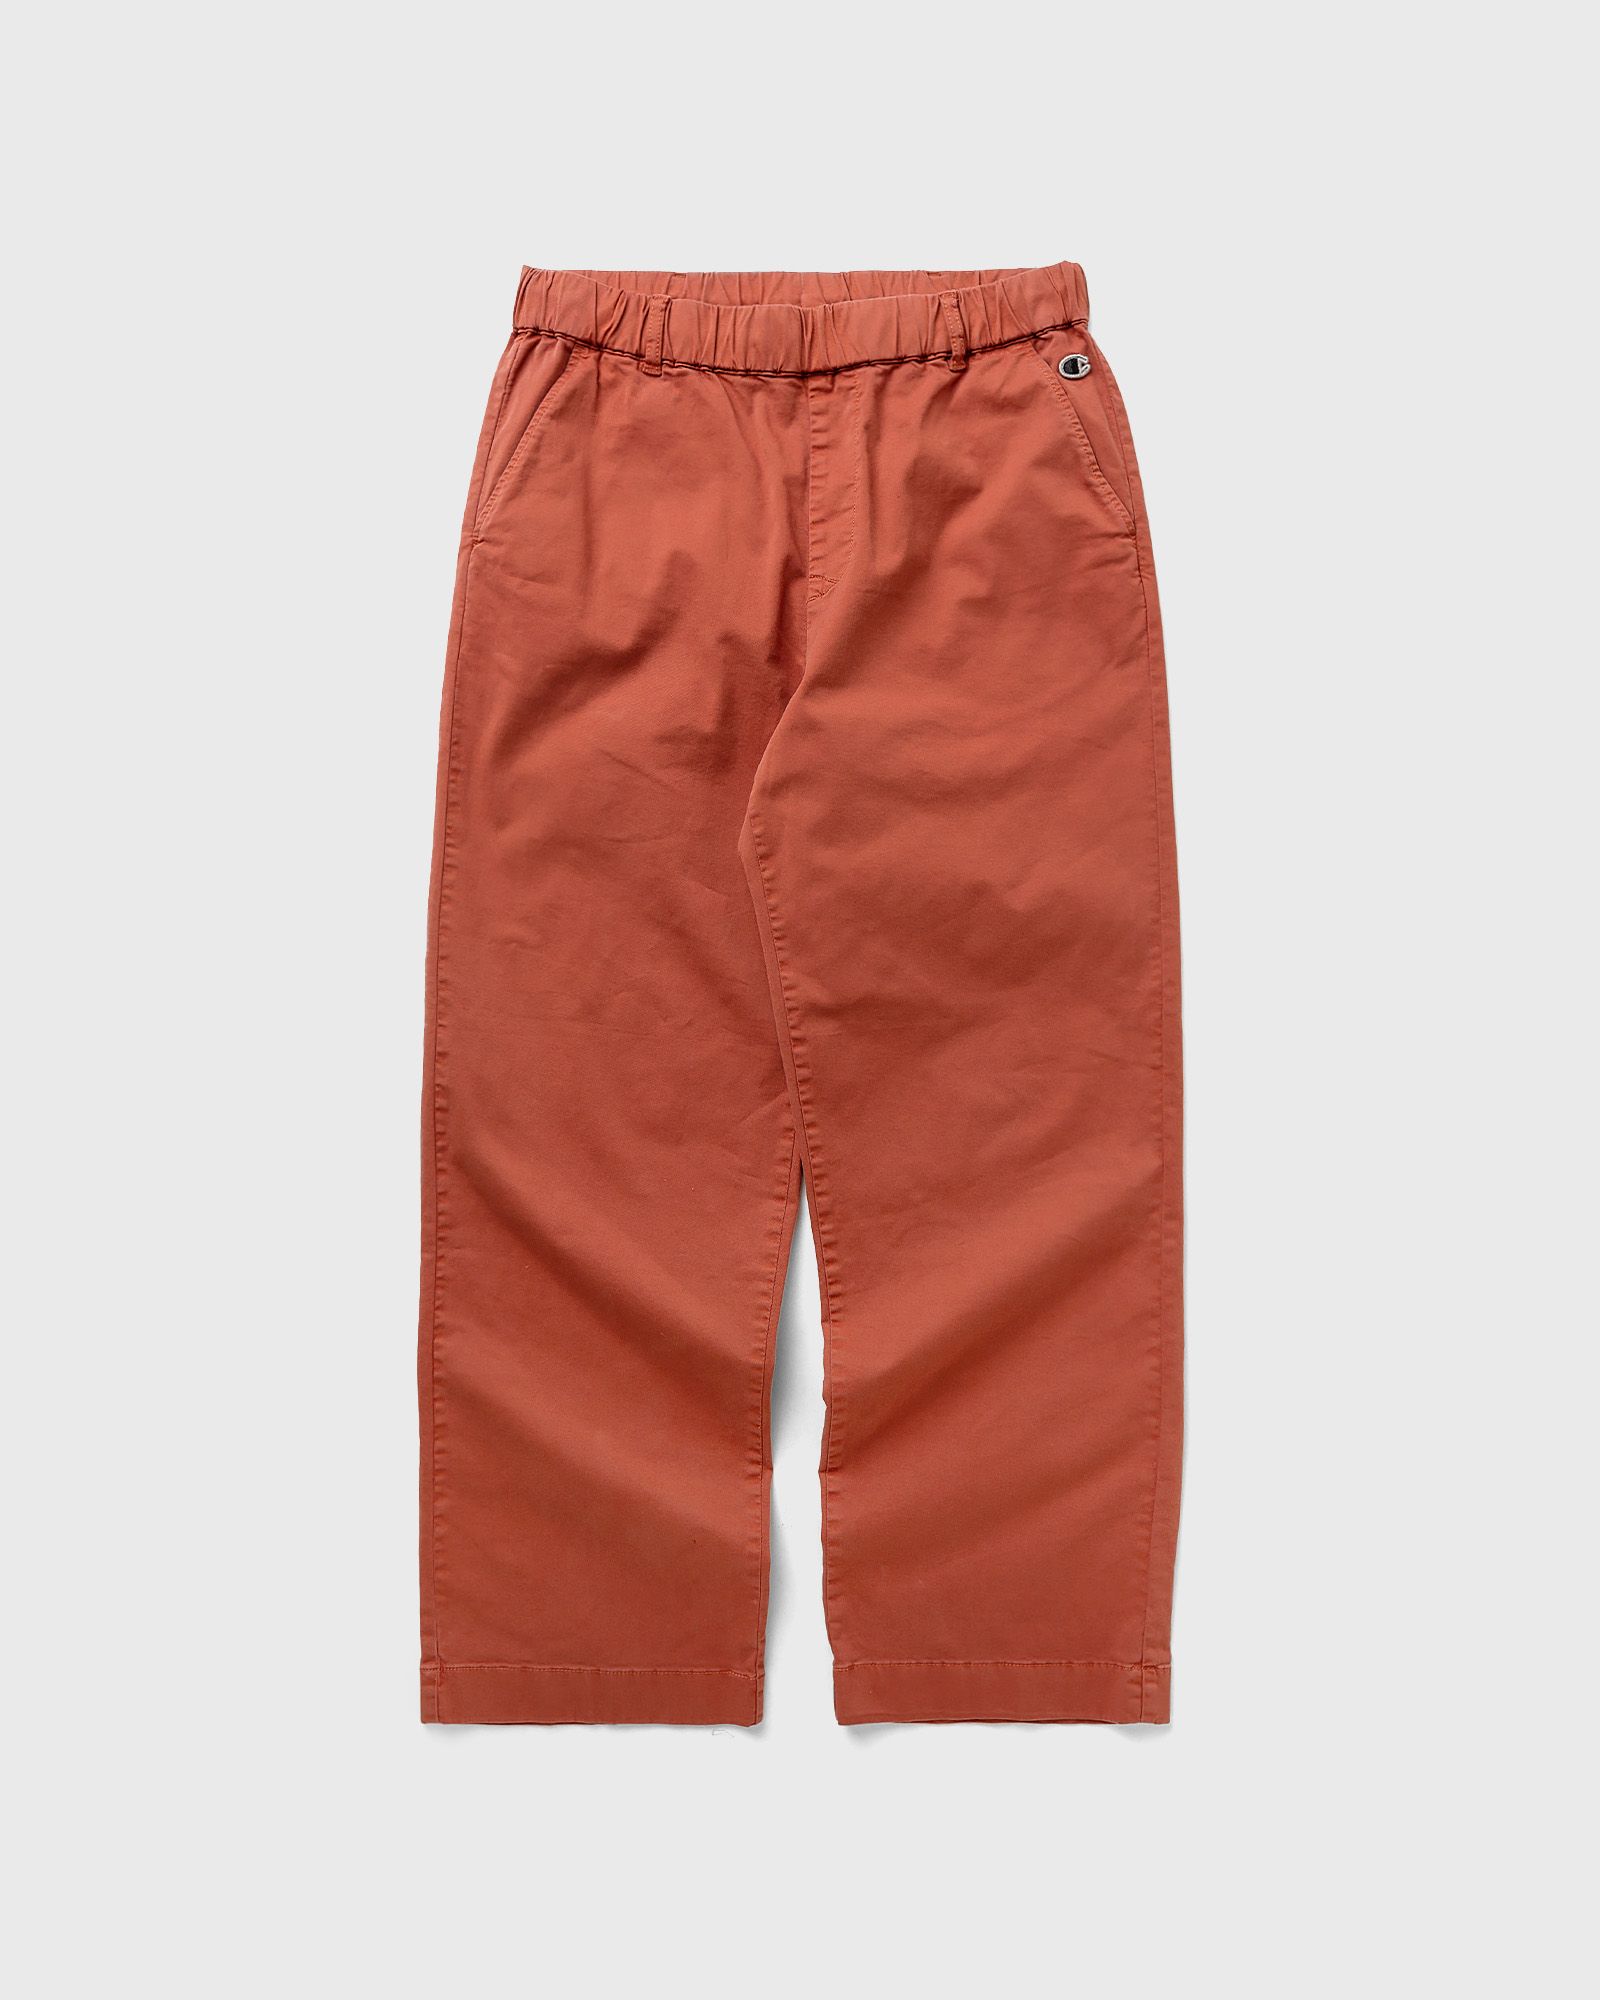 CHAMPION - straight hem pants men casual pants orange in größe:xl